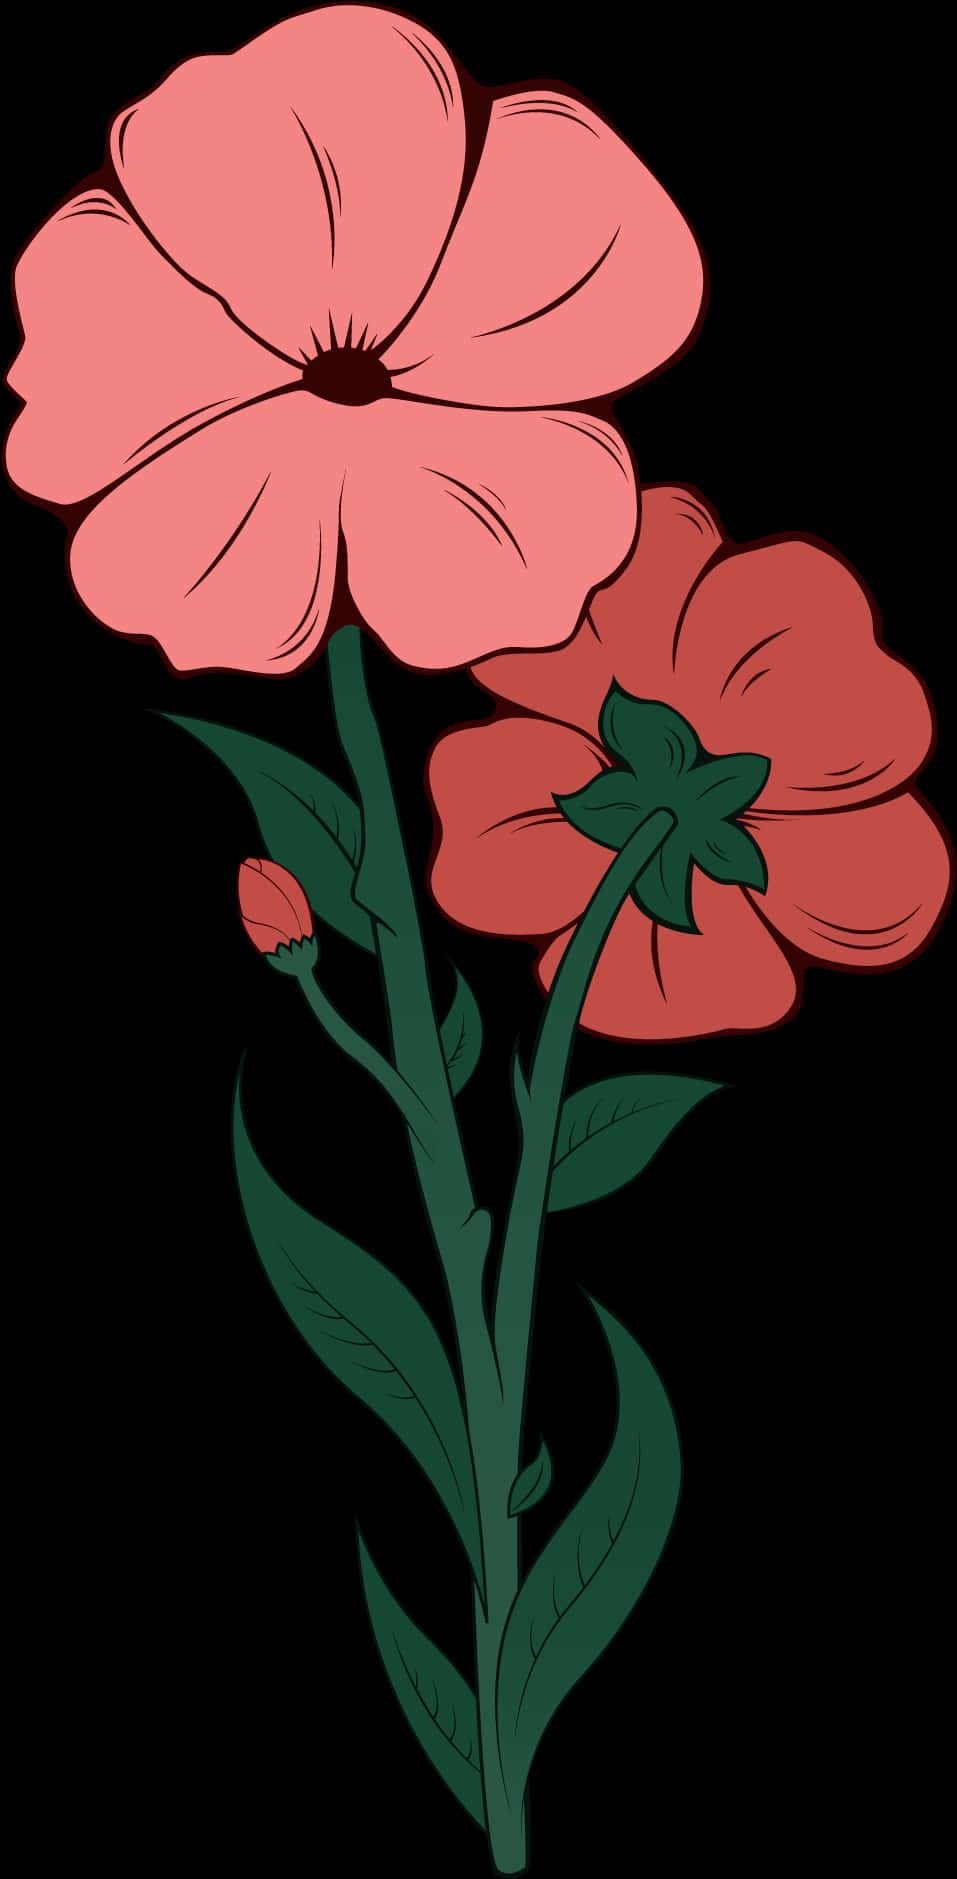 Stylized Pink Flowers Illustration